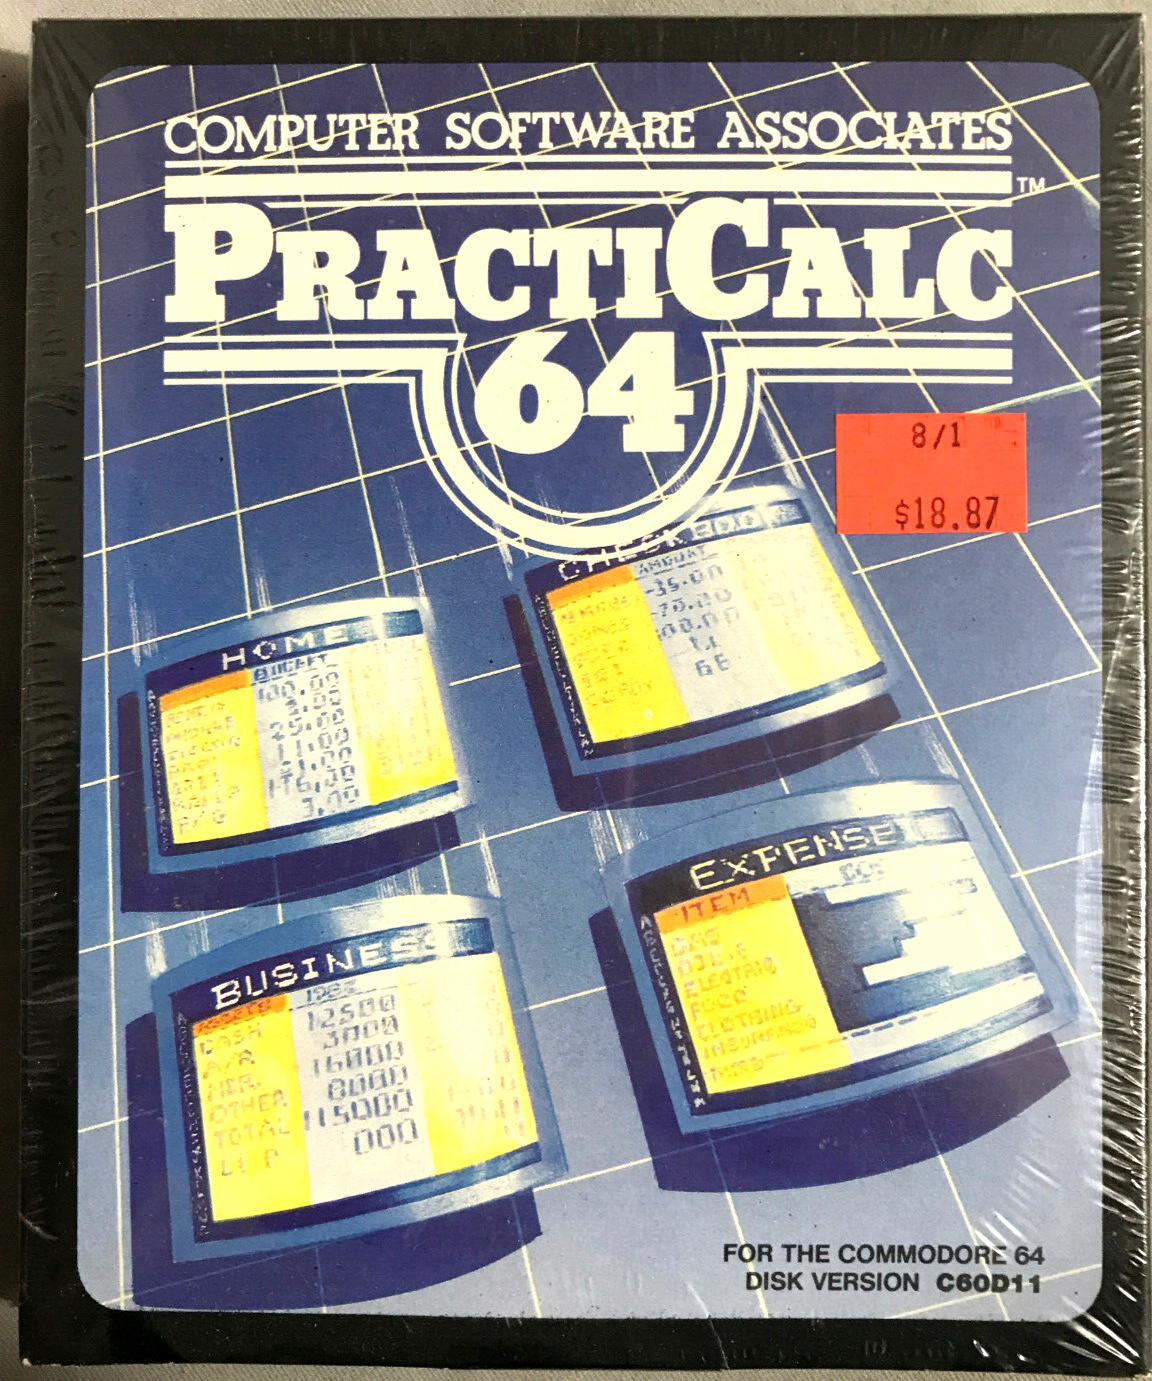 Brand New PractiCalc 5.25 inch diskette for Commodore 64 - CSA